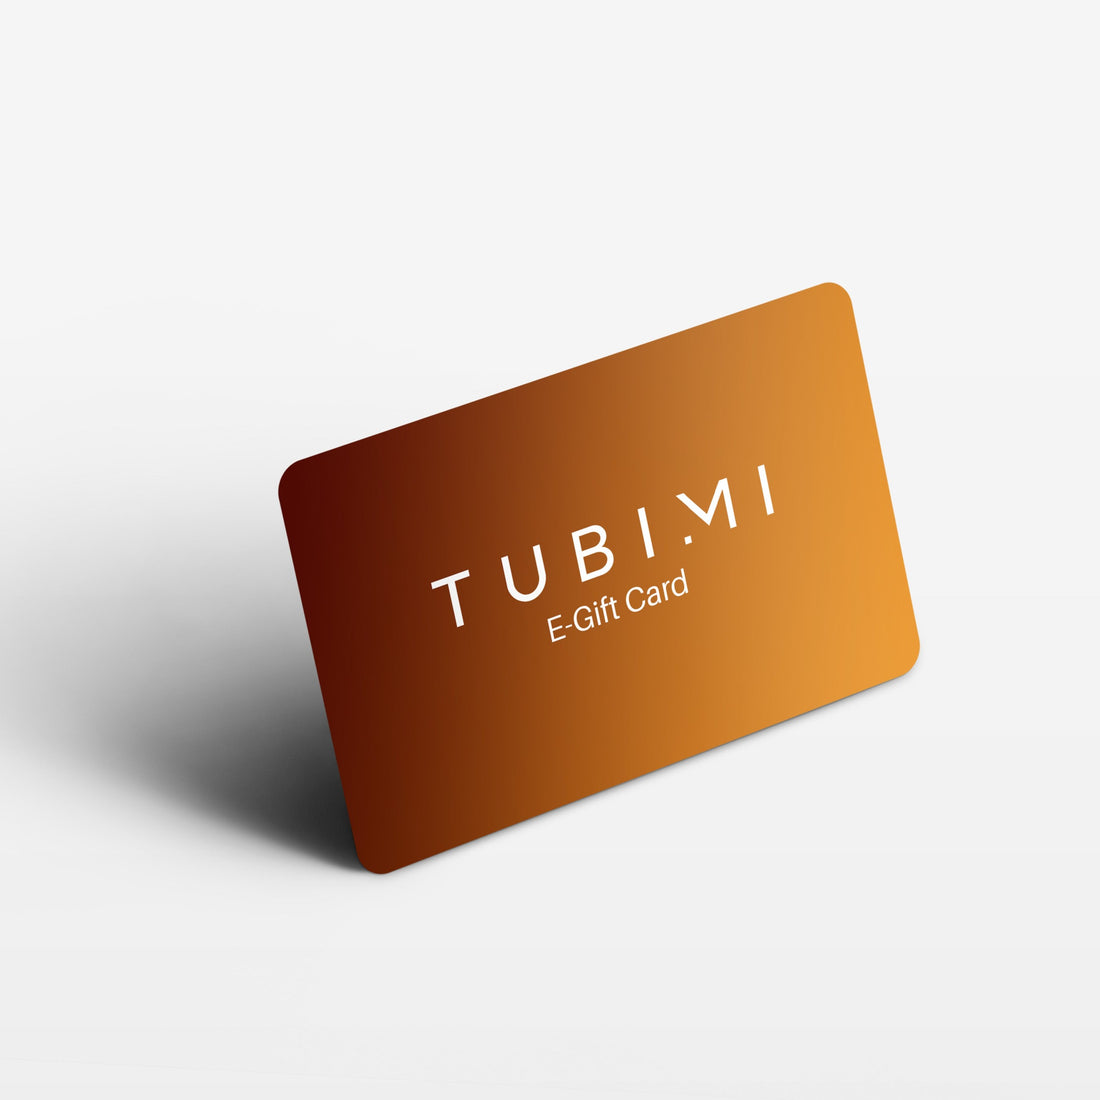 TUBIMI E-Giftcard